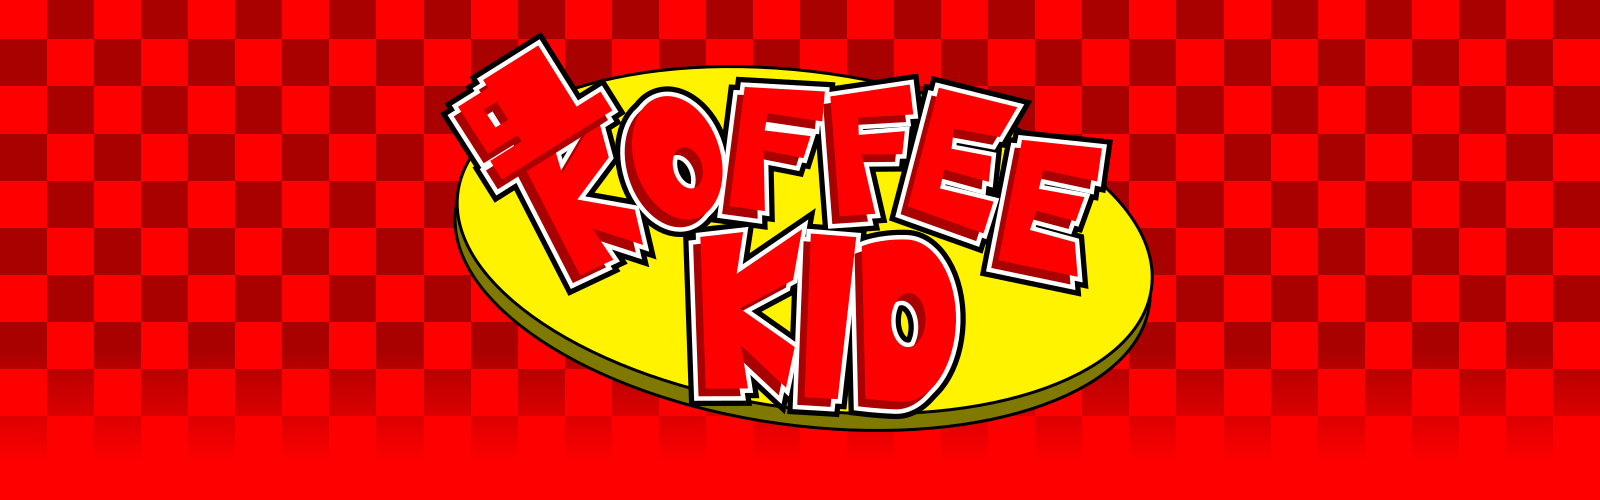 Koffee Kid: The Game [DEMO]